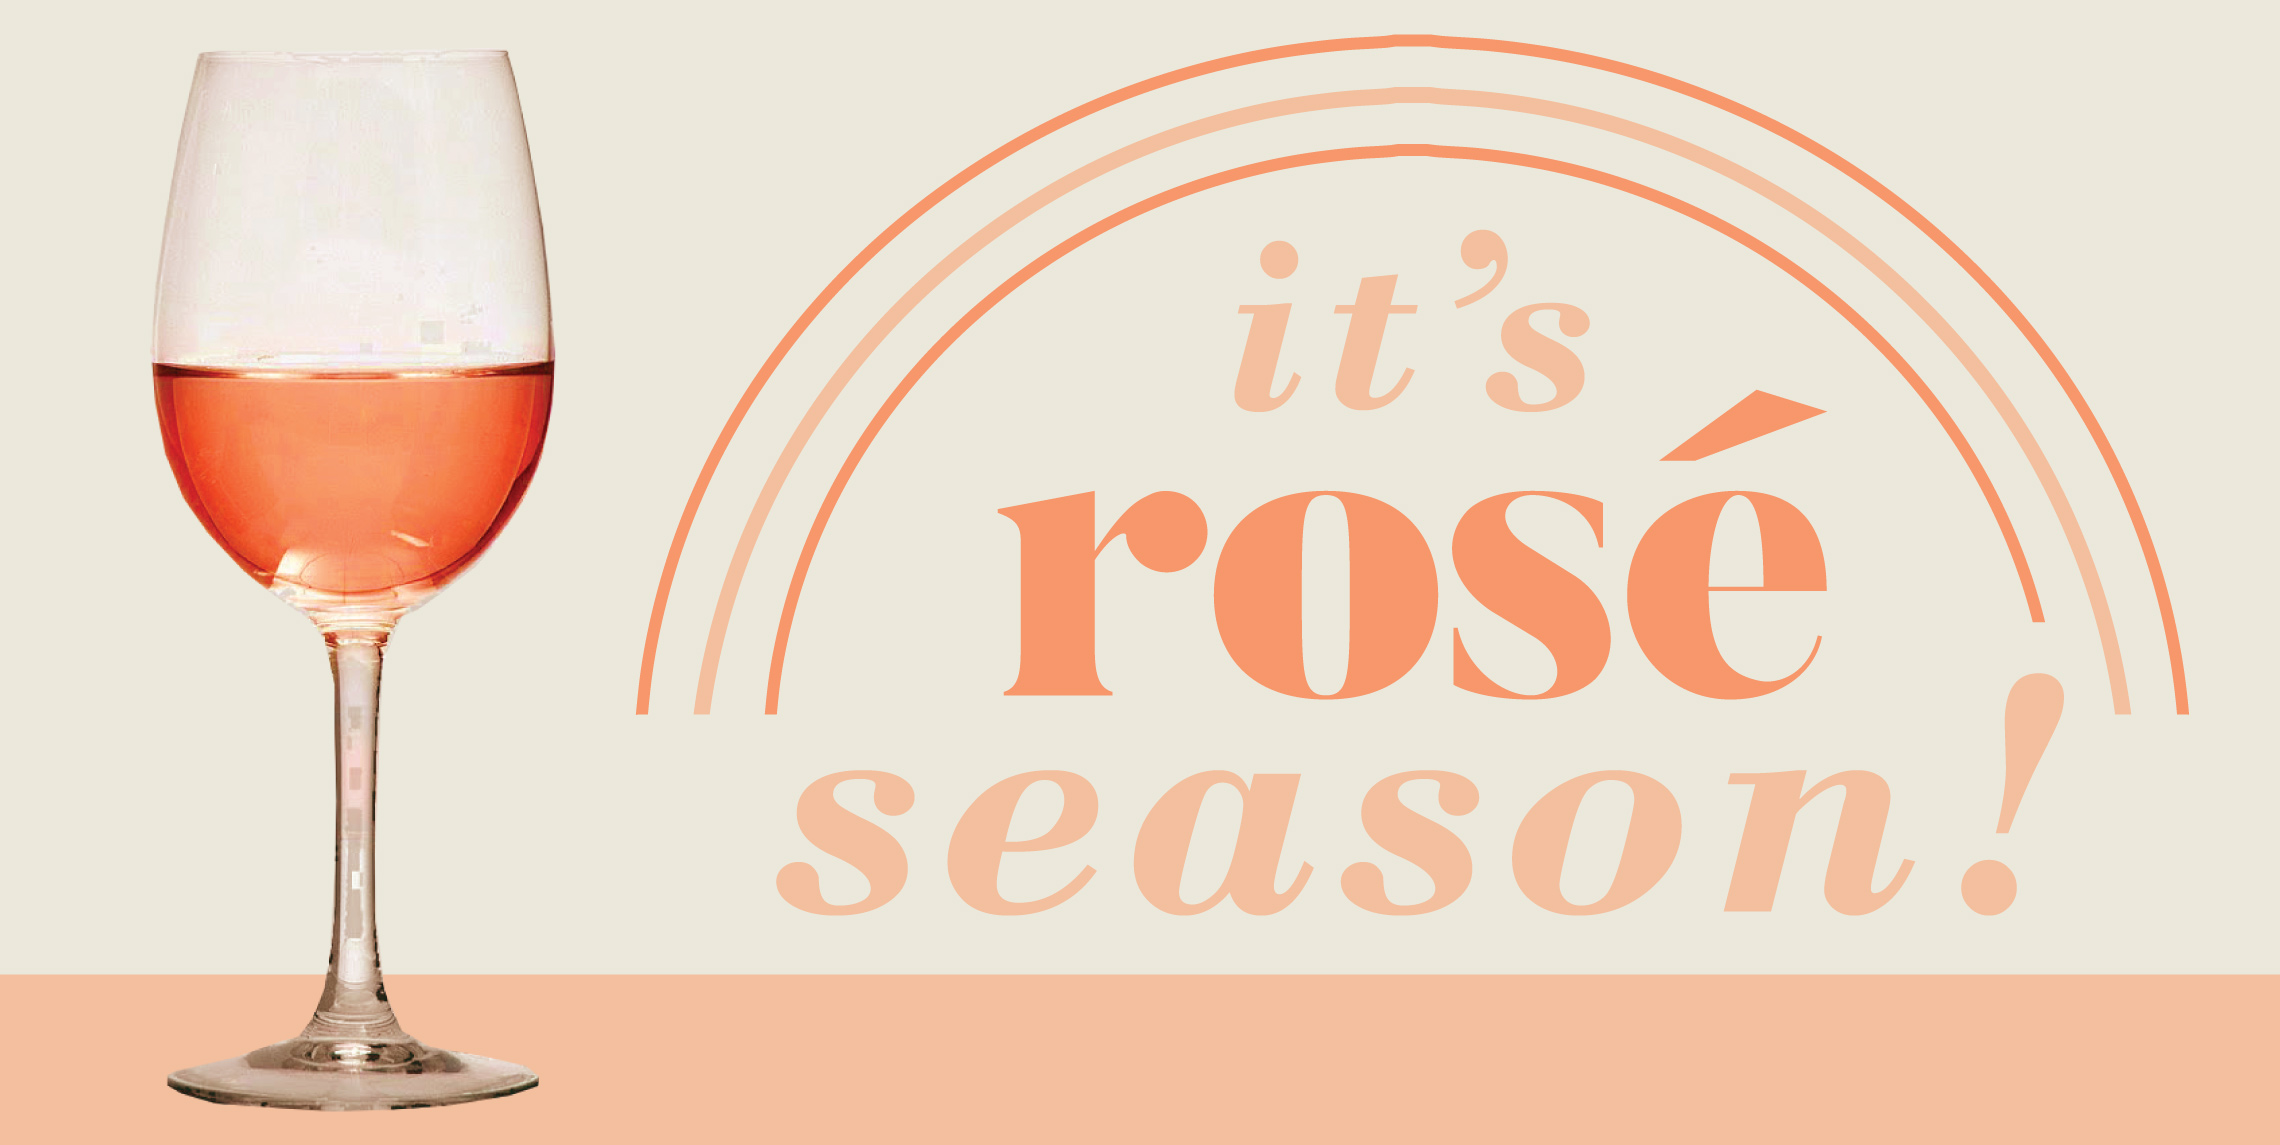 It's Rosé Season!